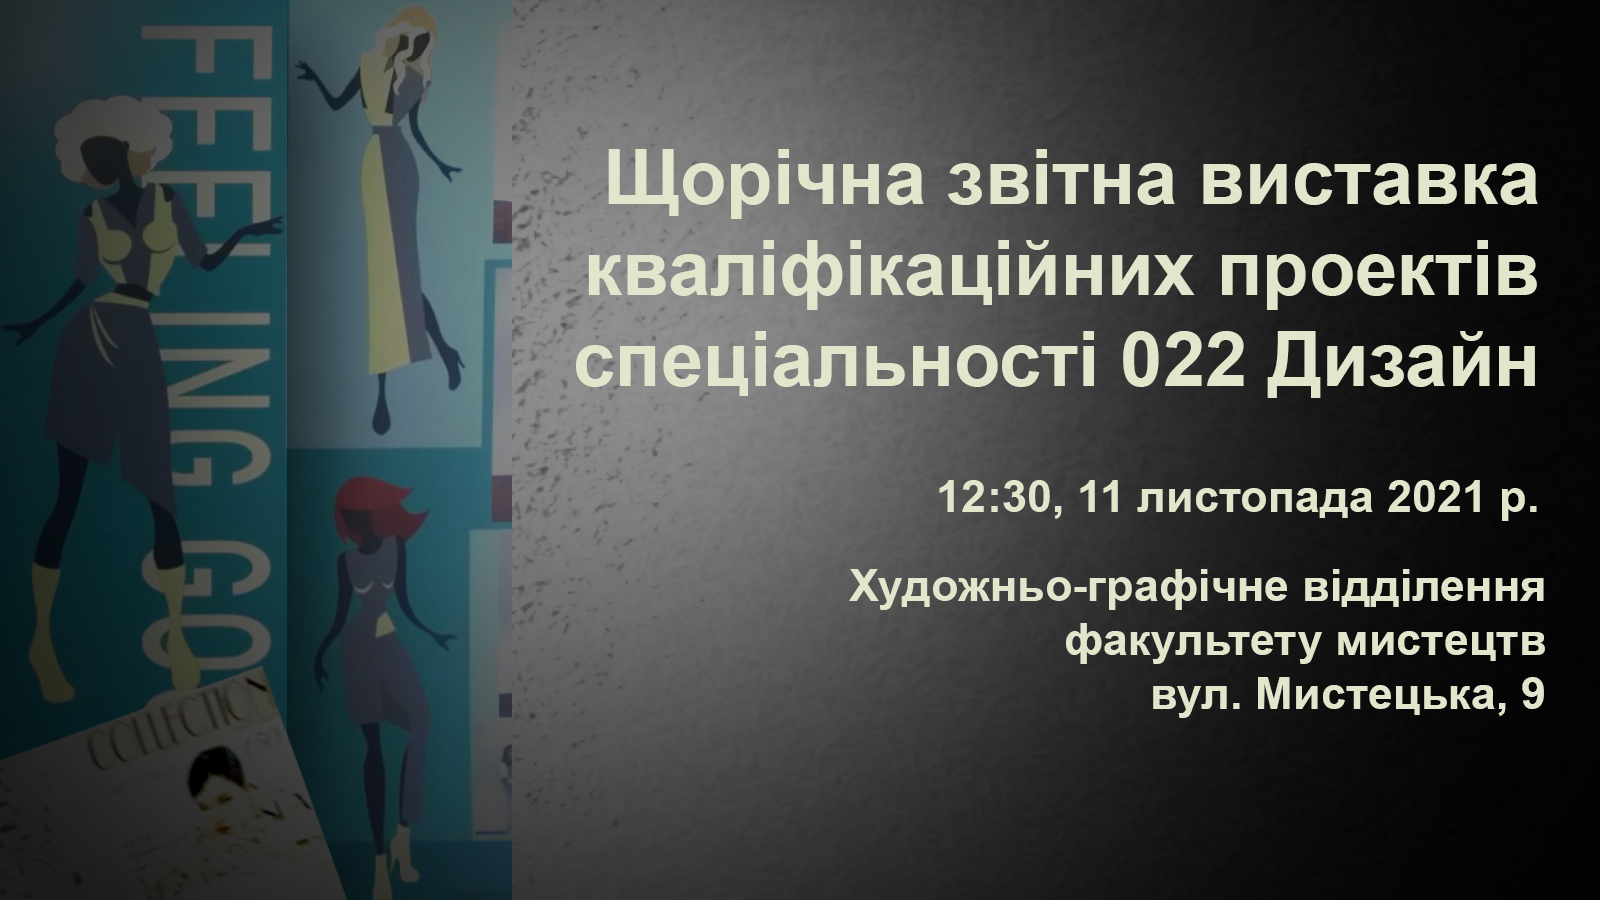 выставка11.11.21